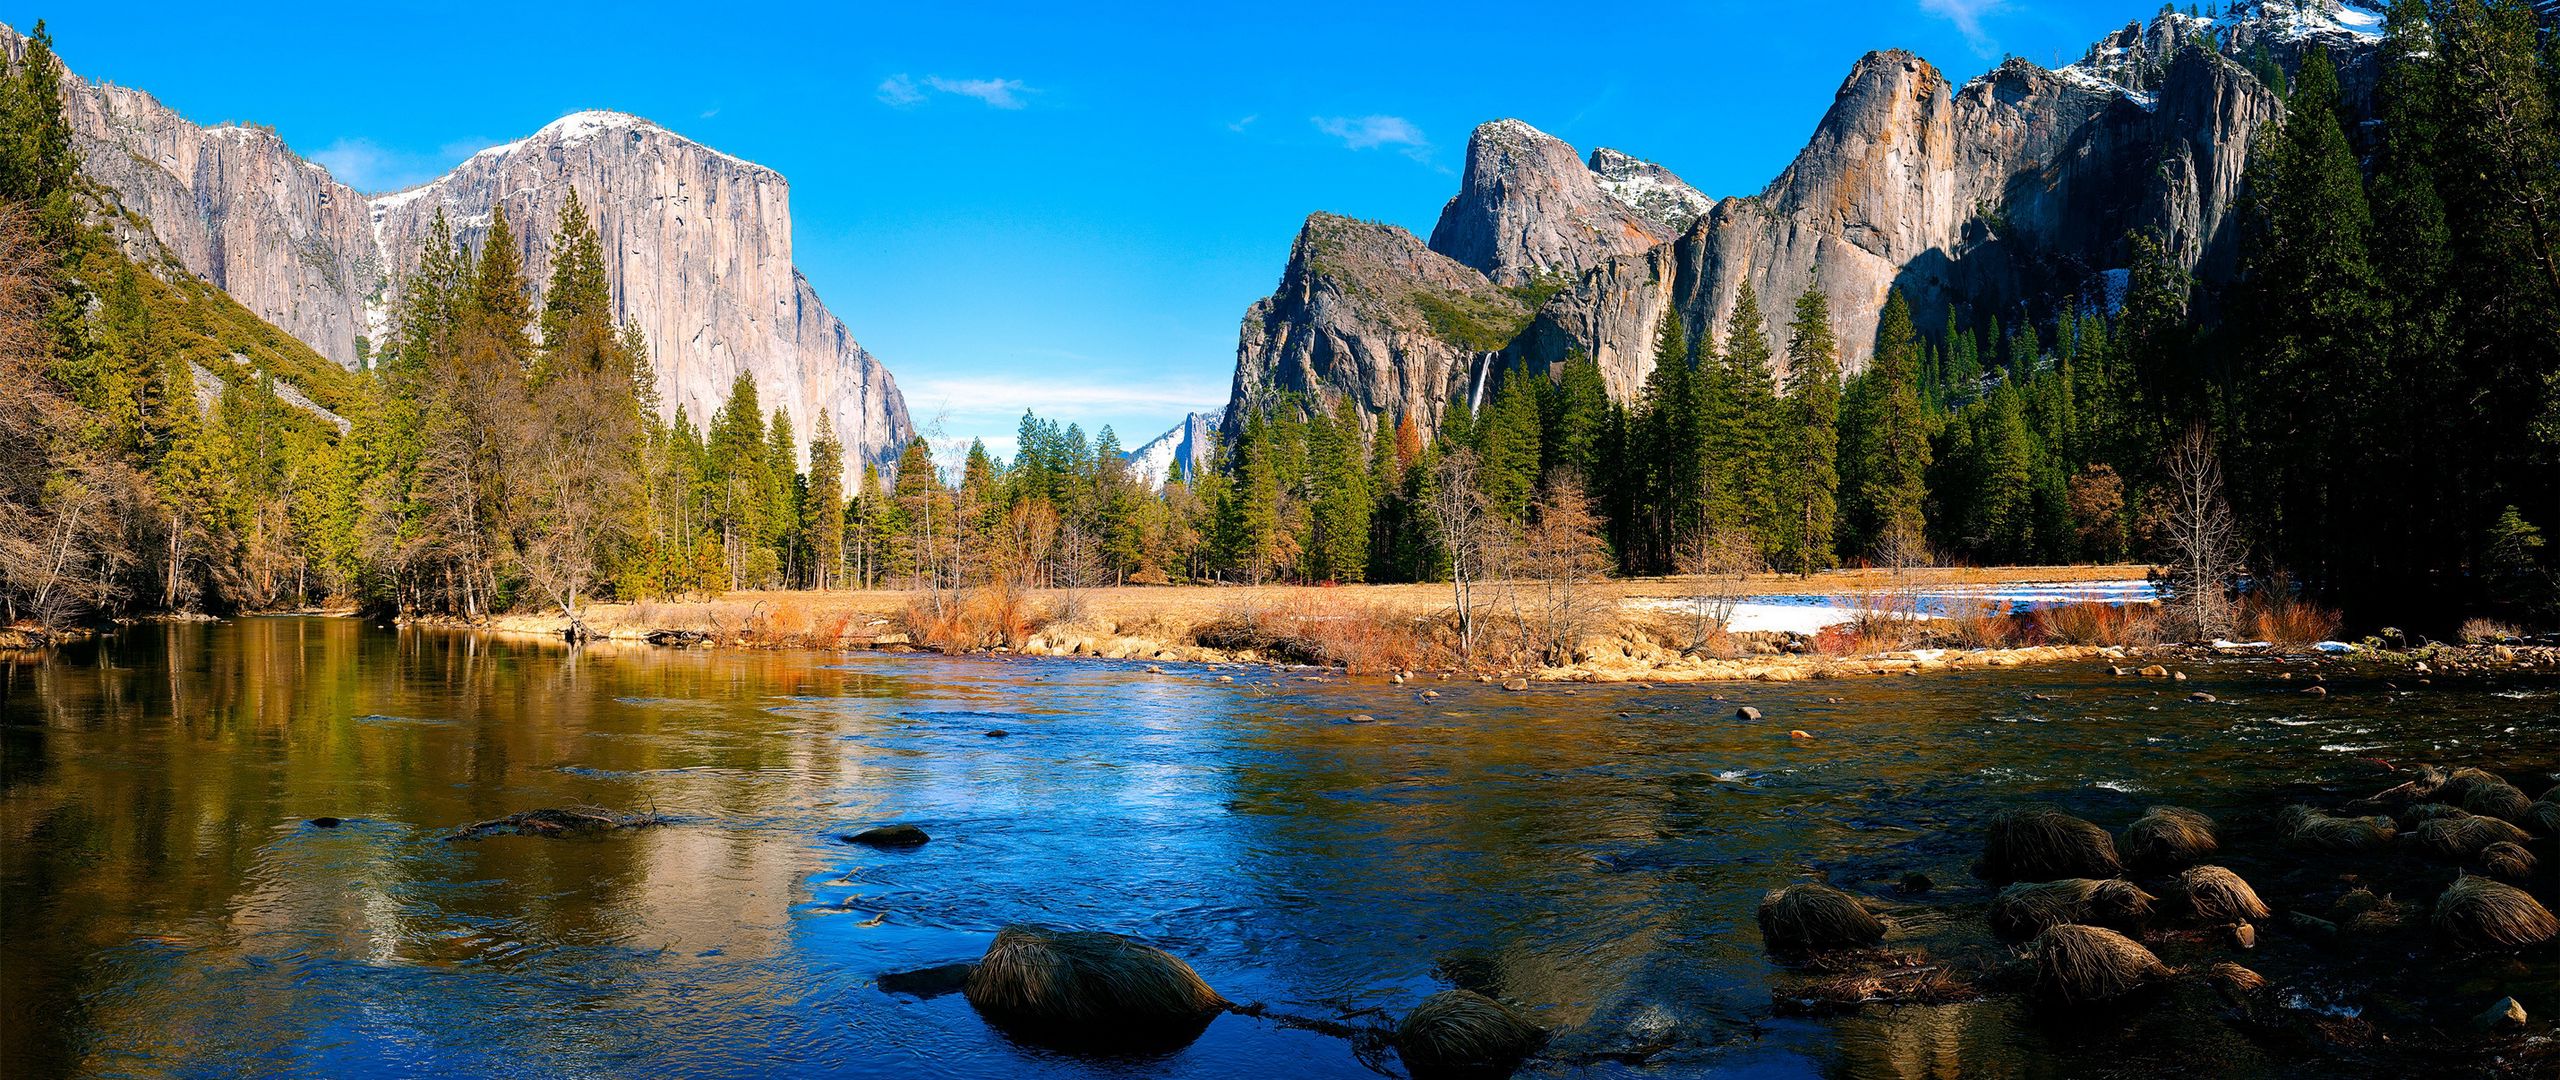 Download wallpaper 2560x1080 river, mountain, landscape dual wide 1080p hd  background